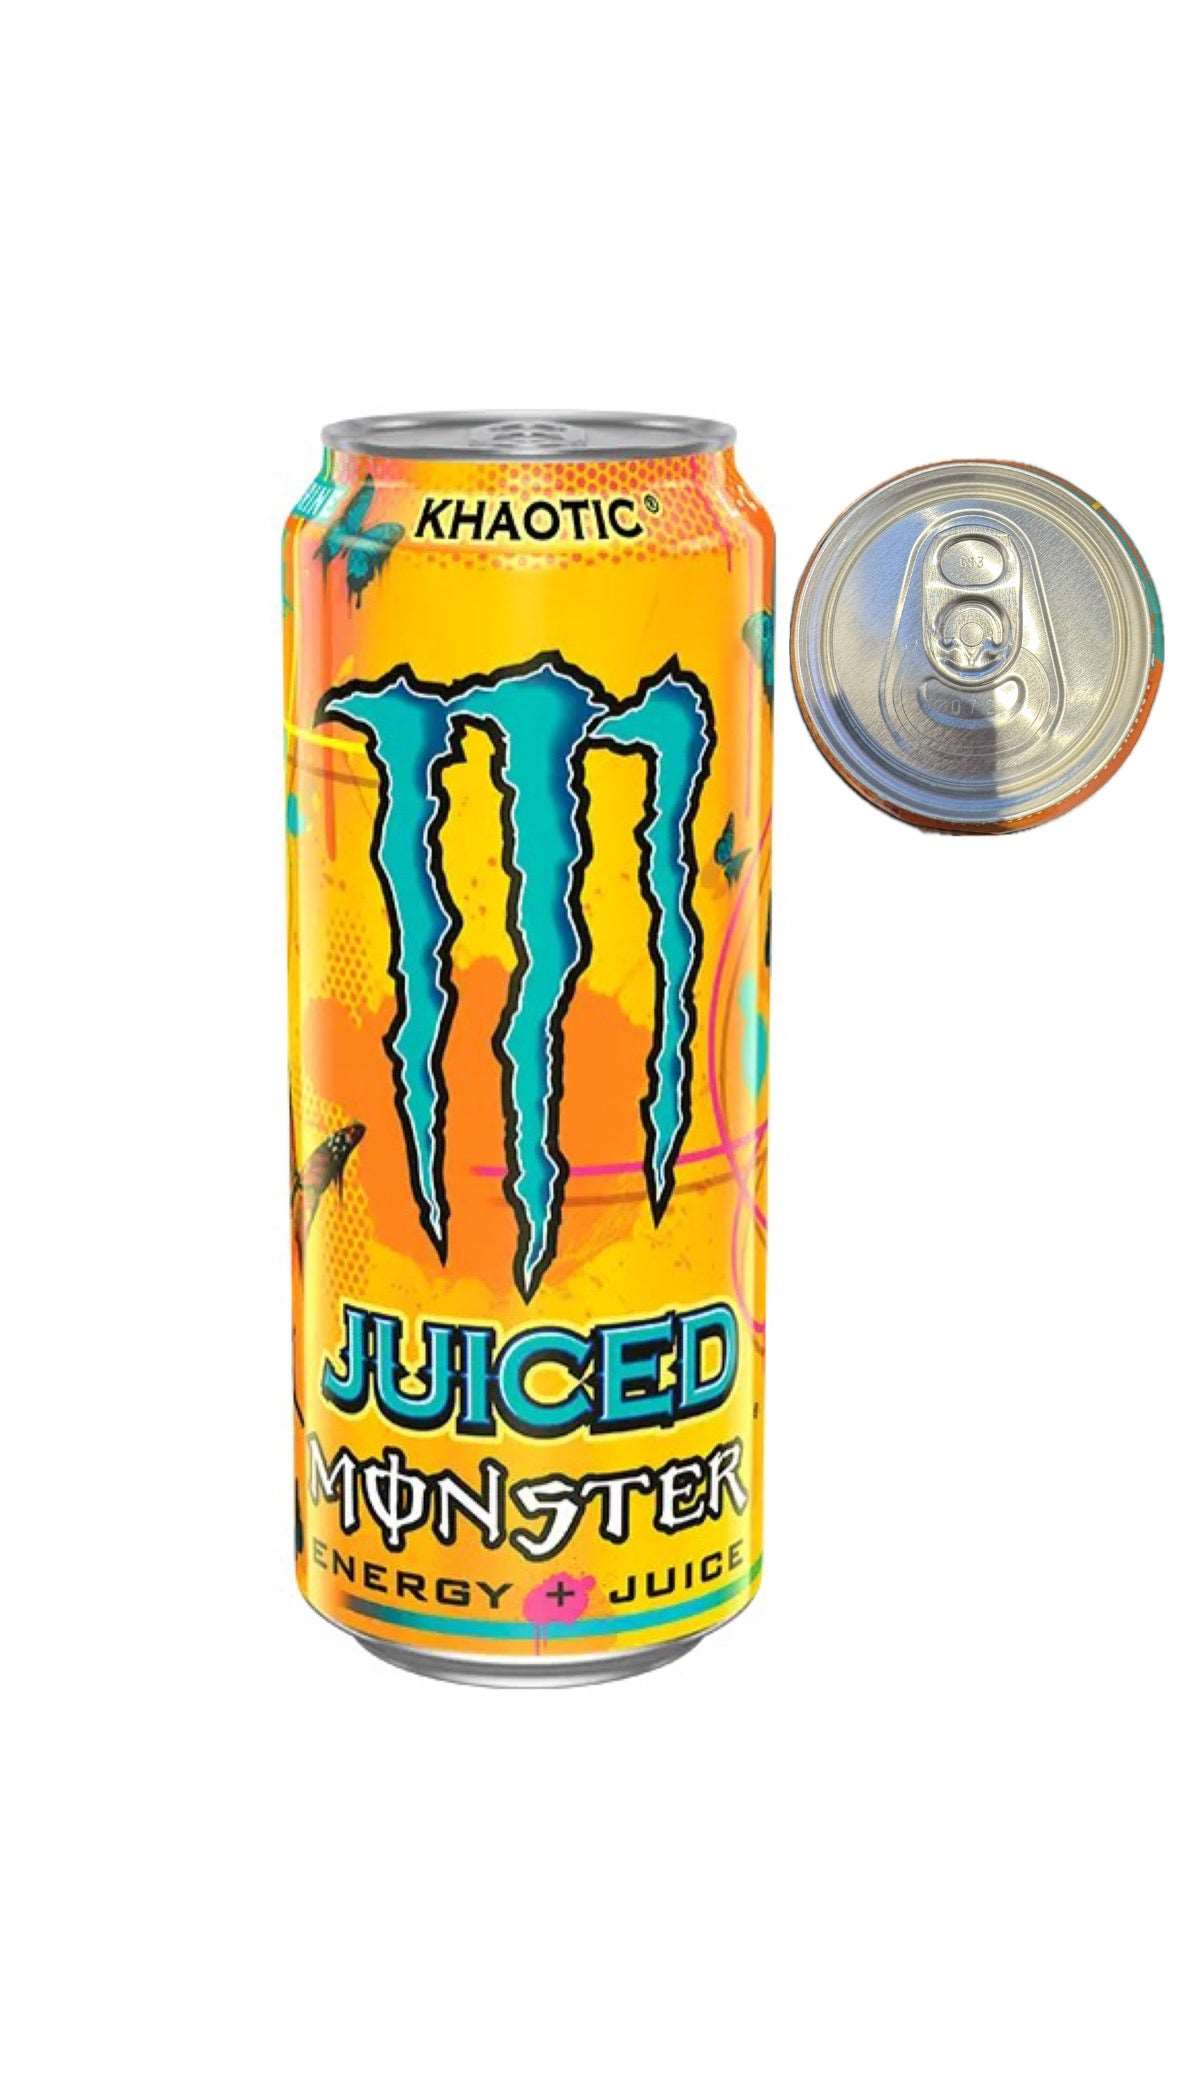 Monster Energy Juiced Khaotic PL sku: 0821 ( prodotto con possibili ammaccature )